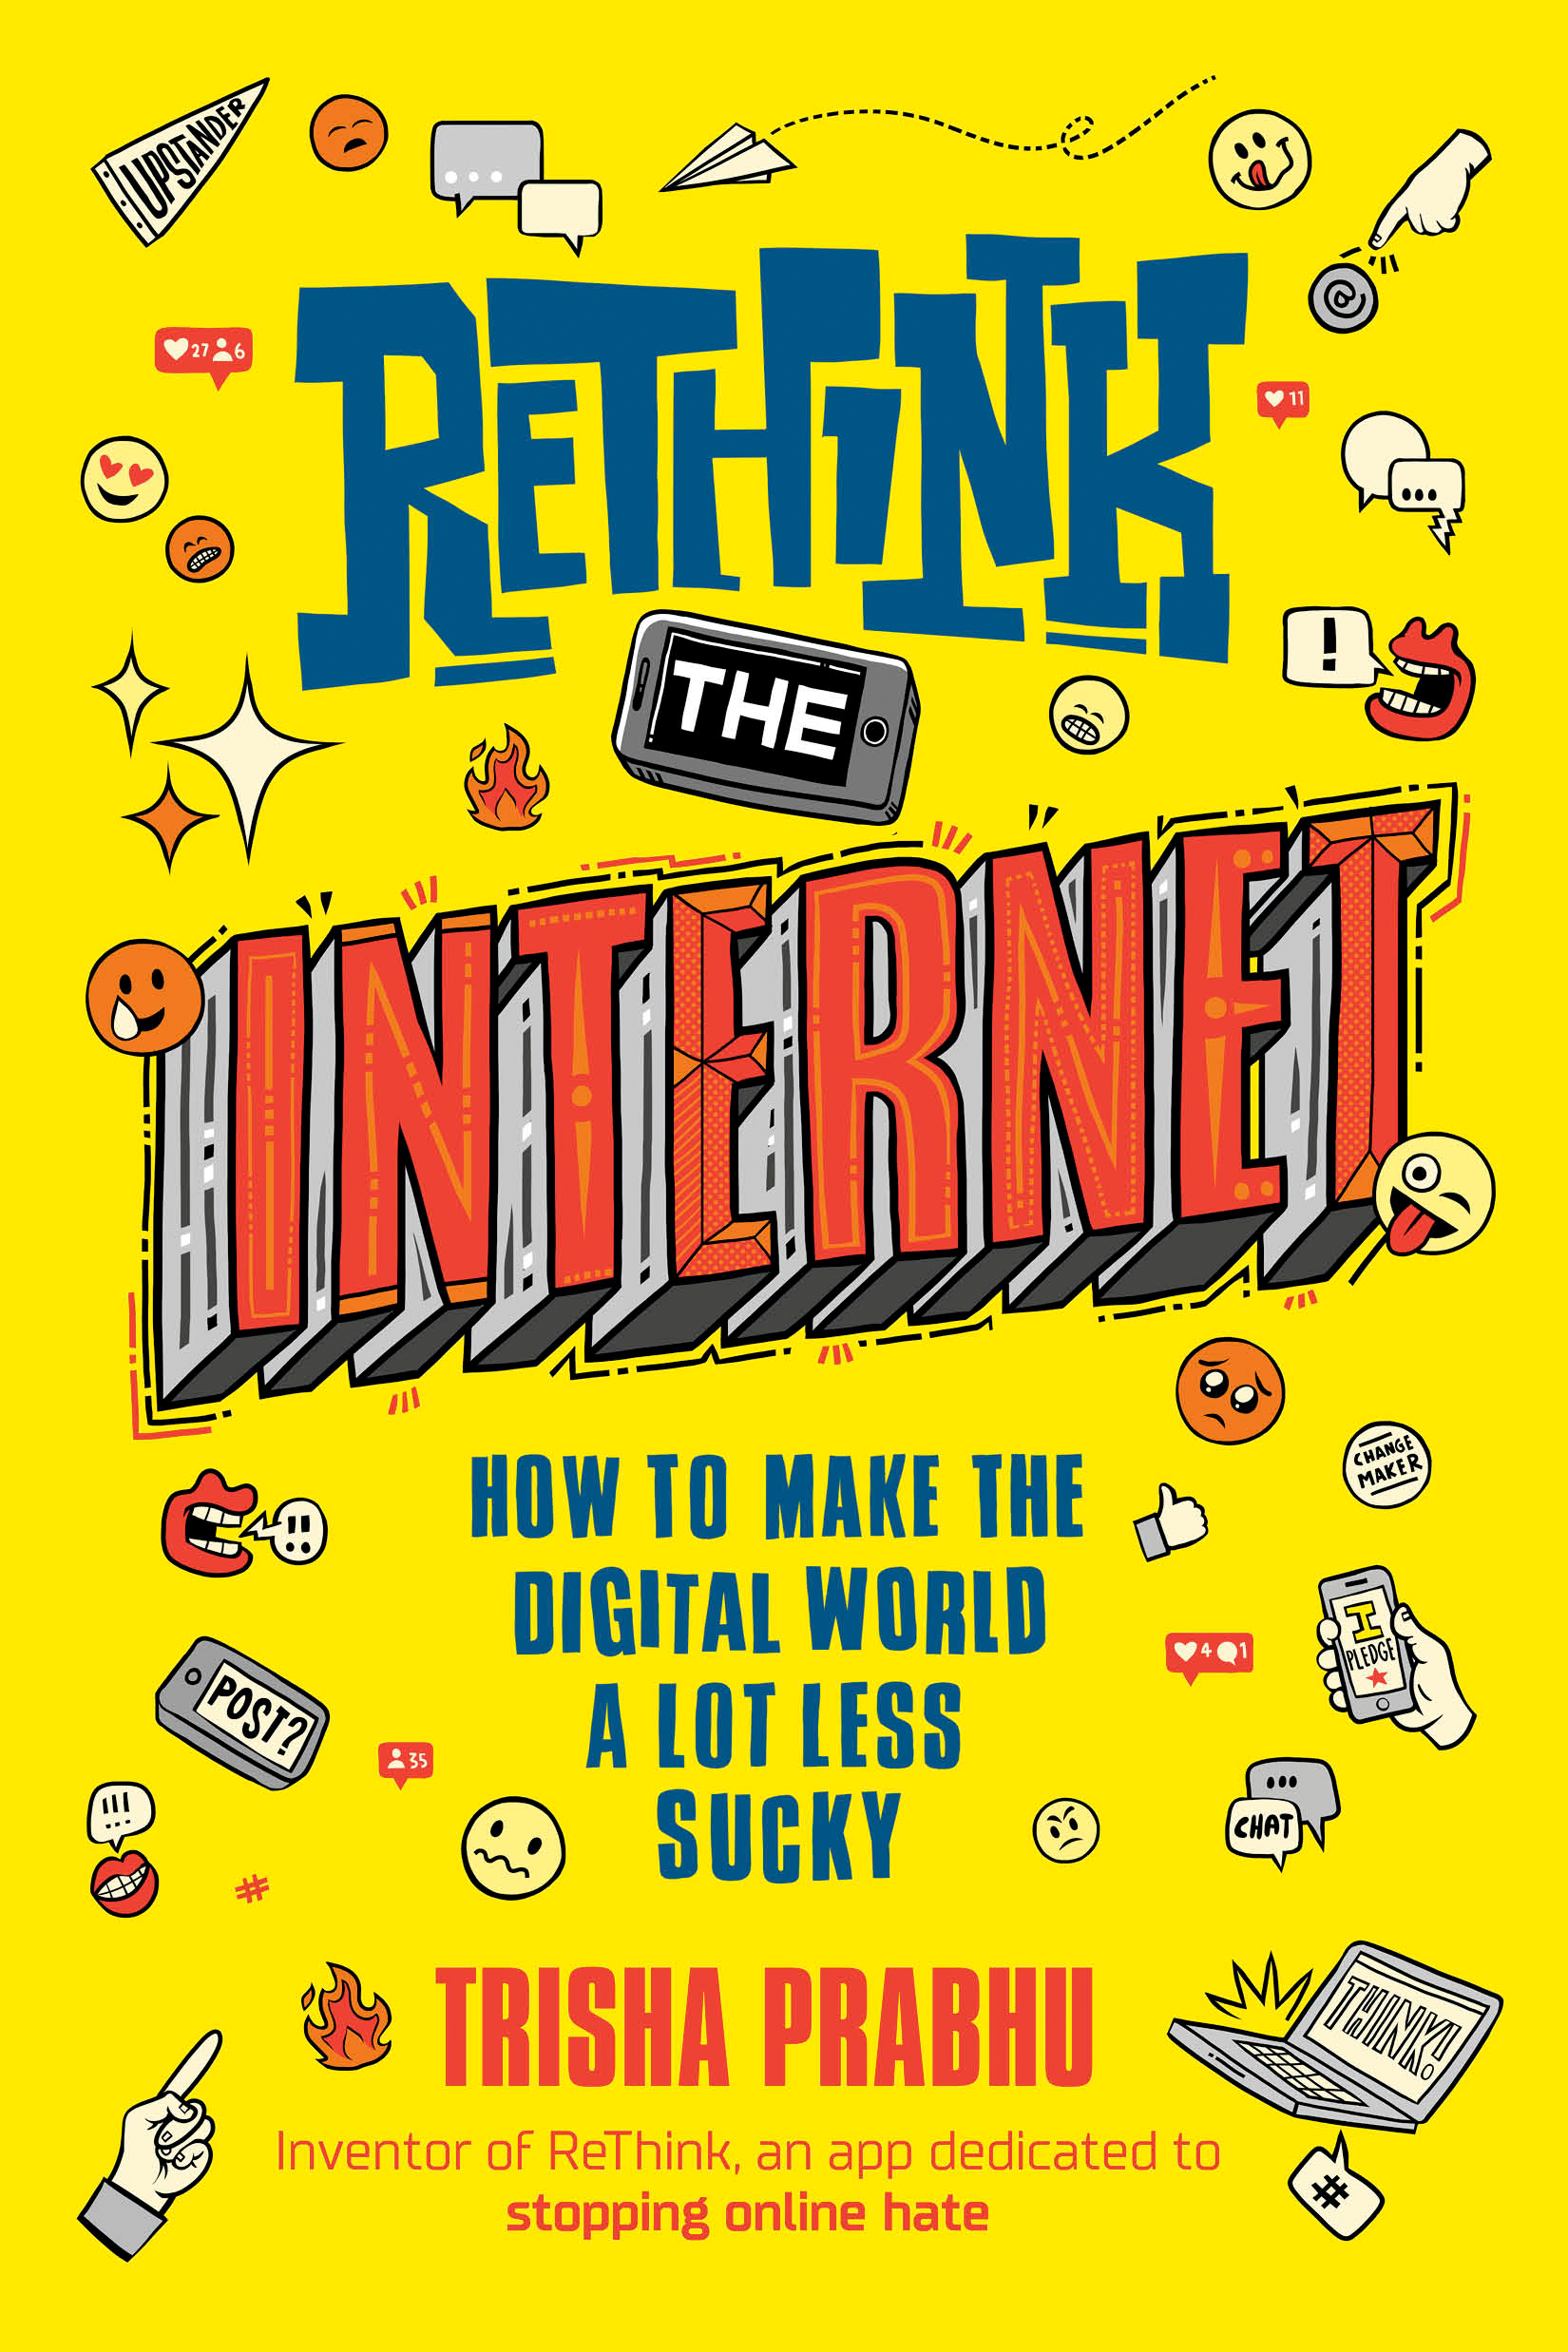 ReThink The Internet - How to Make the Digital World a Lot Less Sucky by Trisha Prabhu